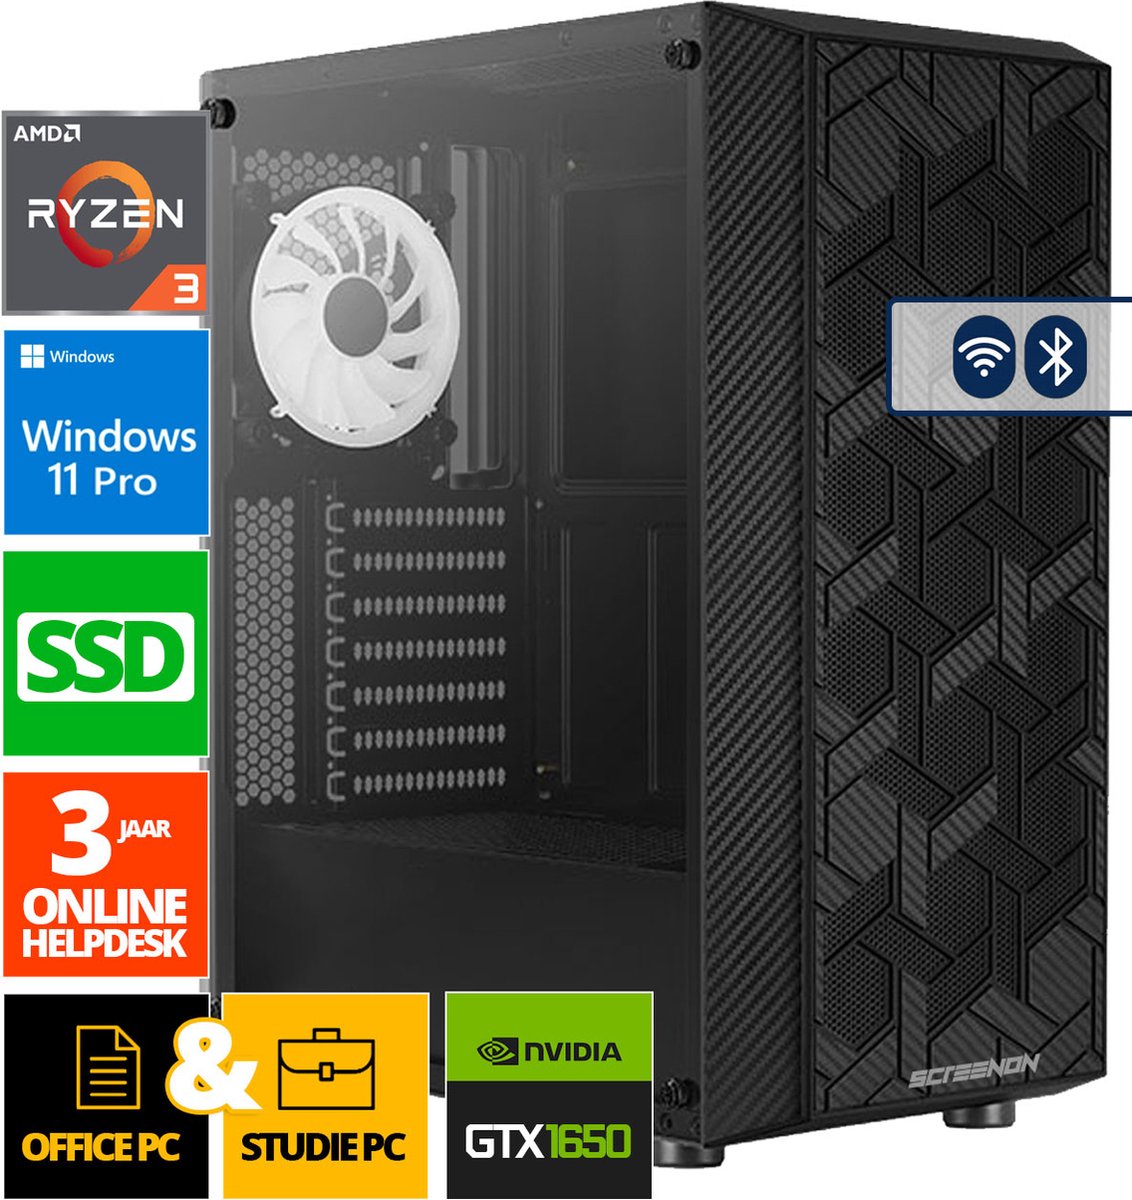 Office Computer - Ryzen 3 - 2048GB SSD - 64GB RAM - GTX 1650 - WX32373 - Windows 11 - ScreenON - Allround Business PC + WiFi & Bluetooth